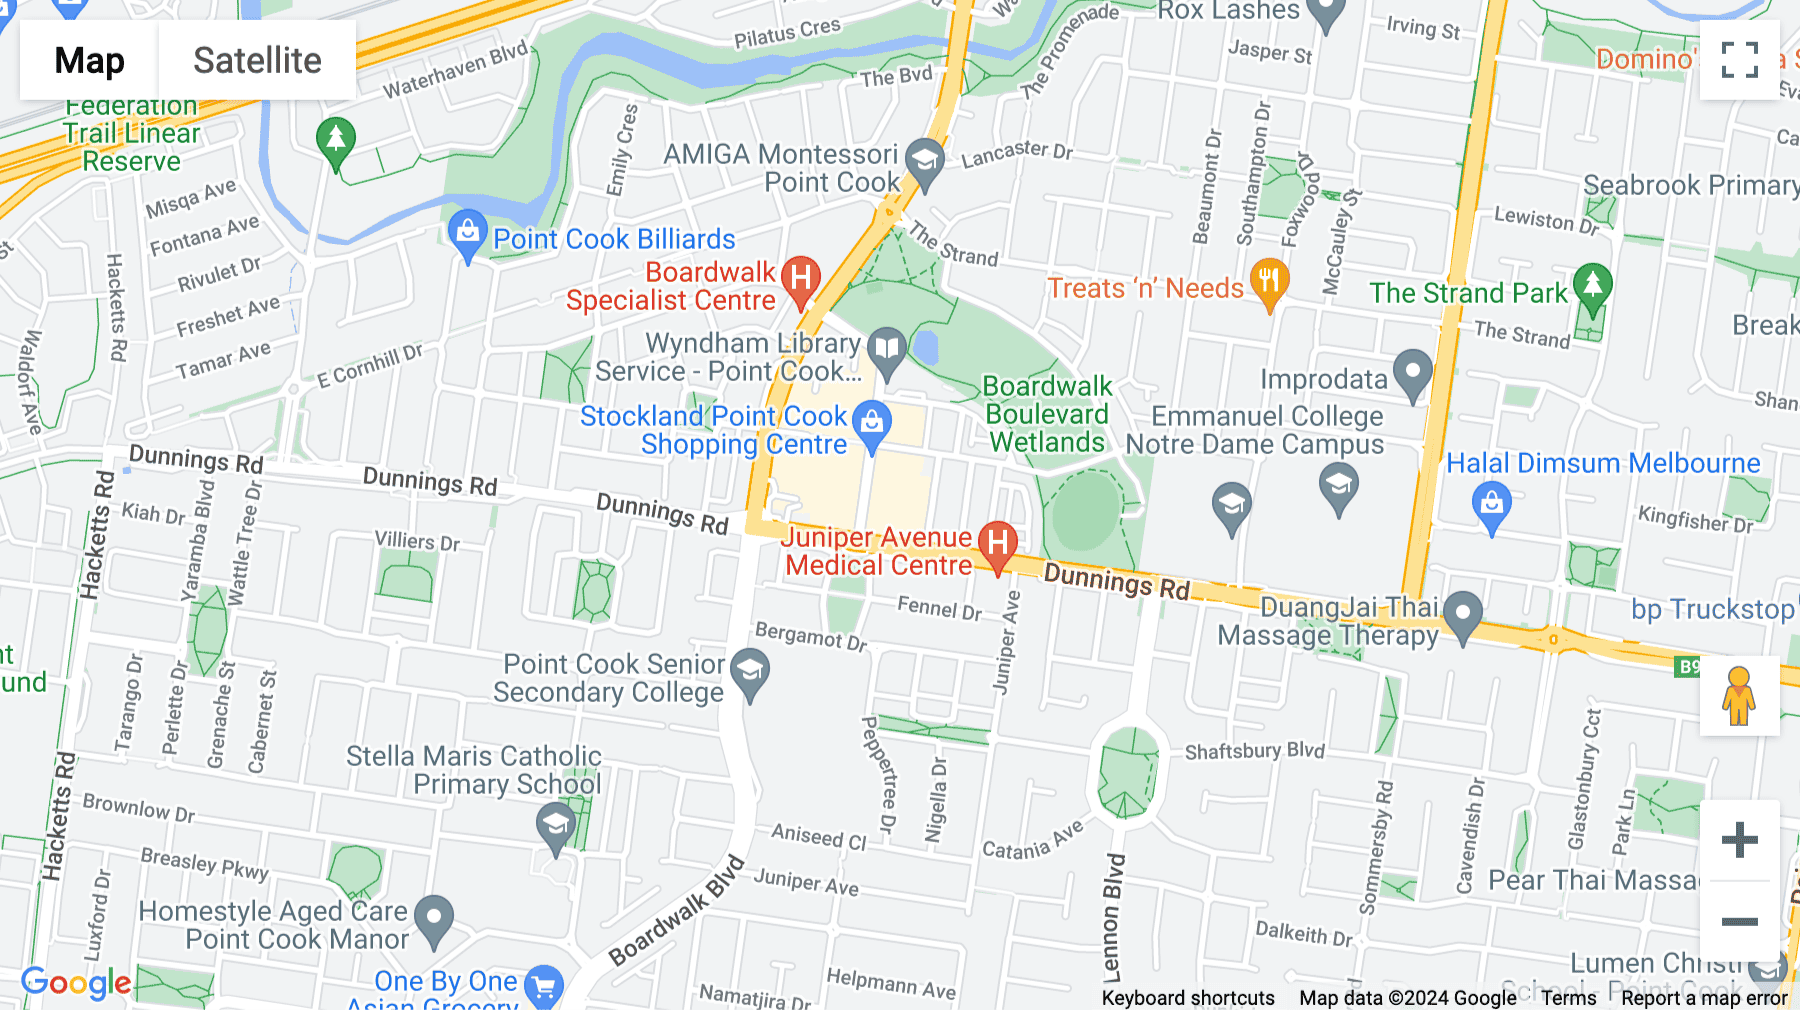 Click for interative map of C5, Level 1, 2 Main Street, Melbourne, Australia, Victoria, Melbourne